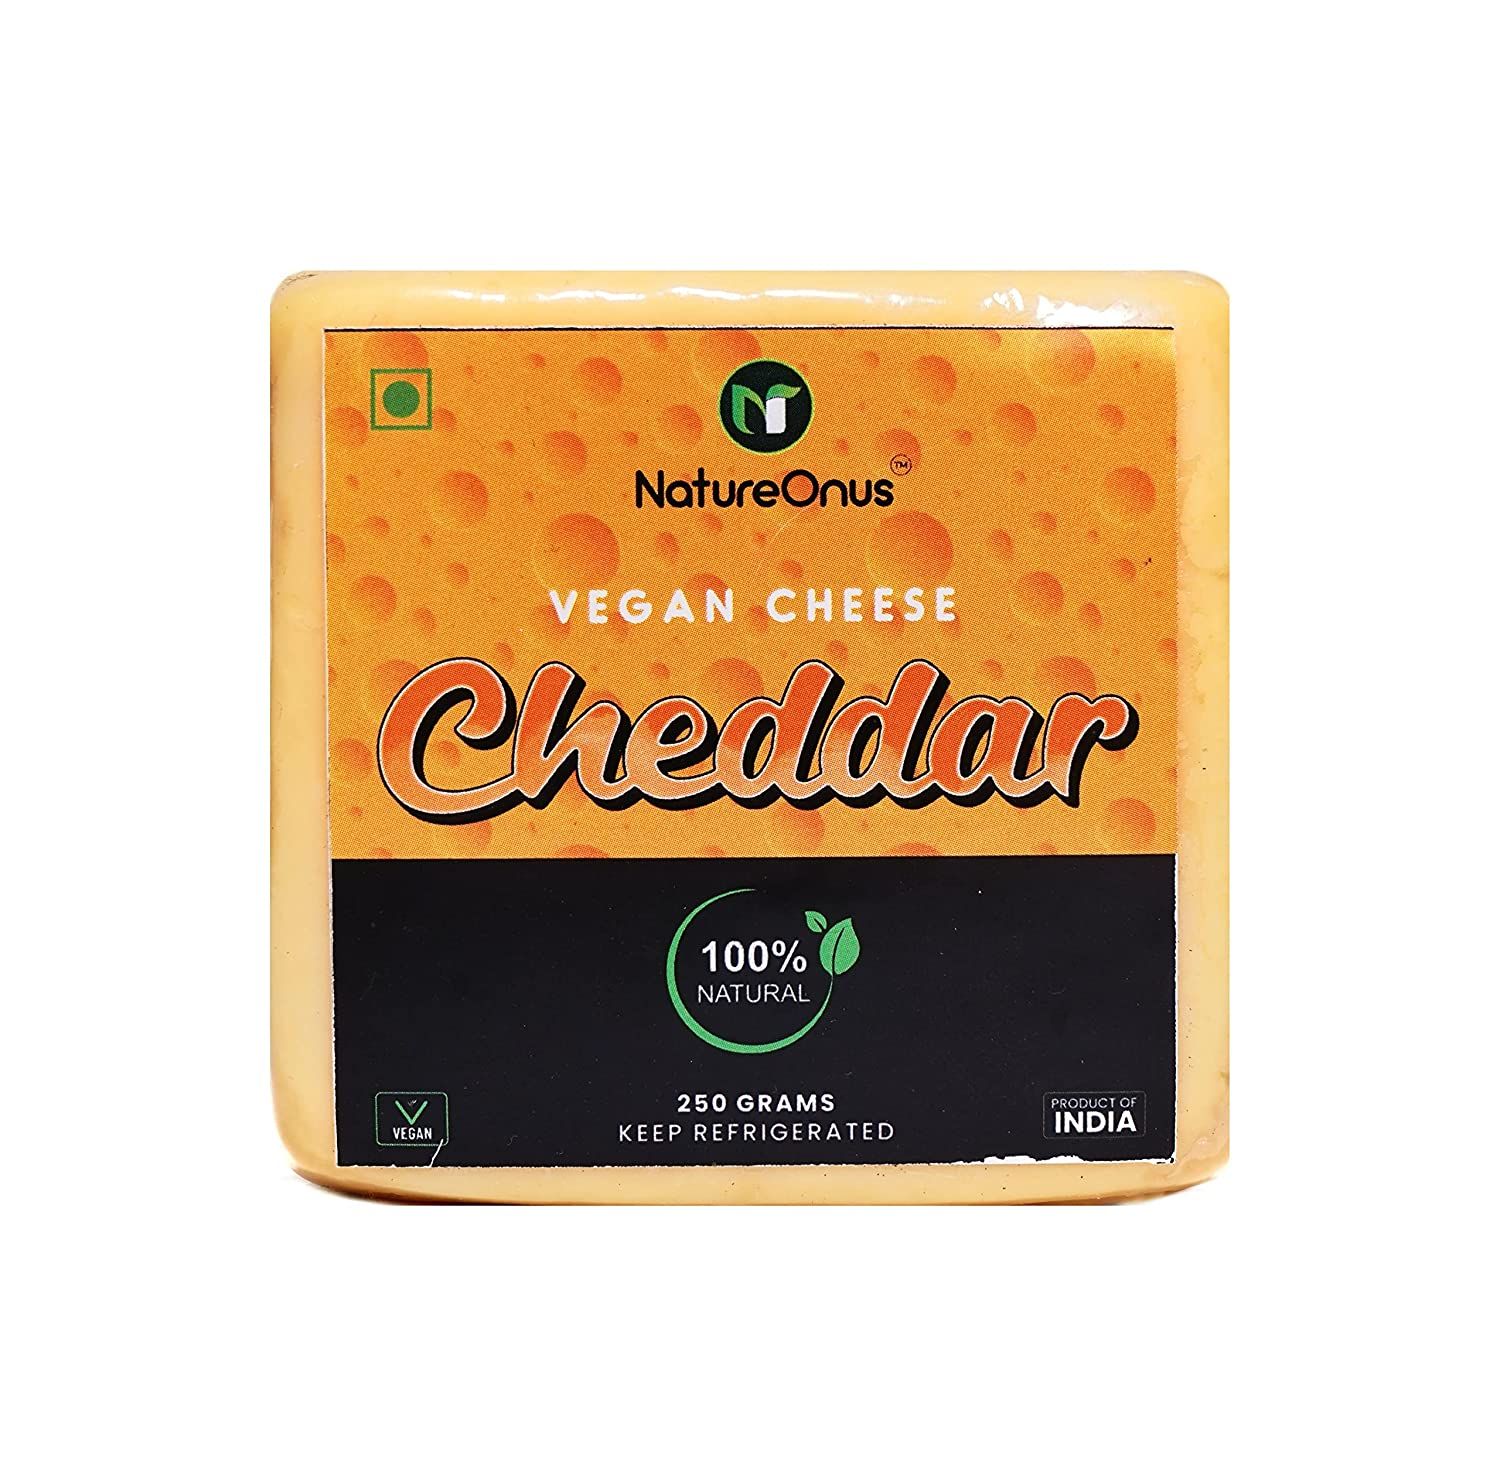 NatureOnus- Vegan Cheddar Cheese Image